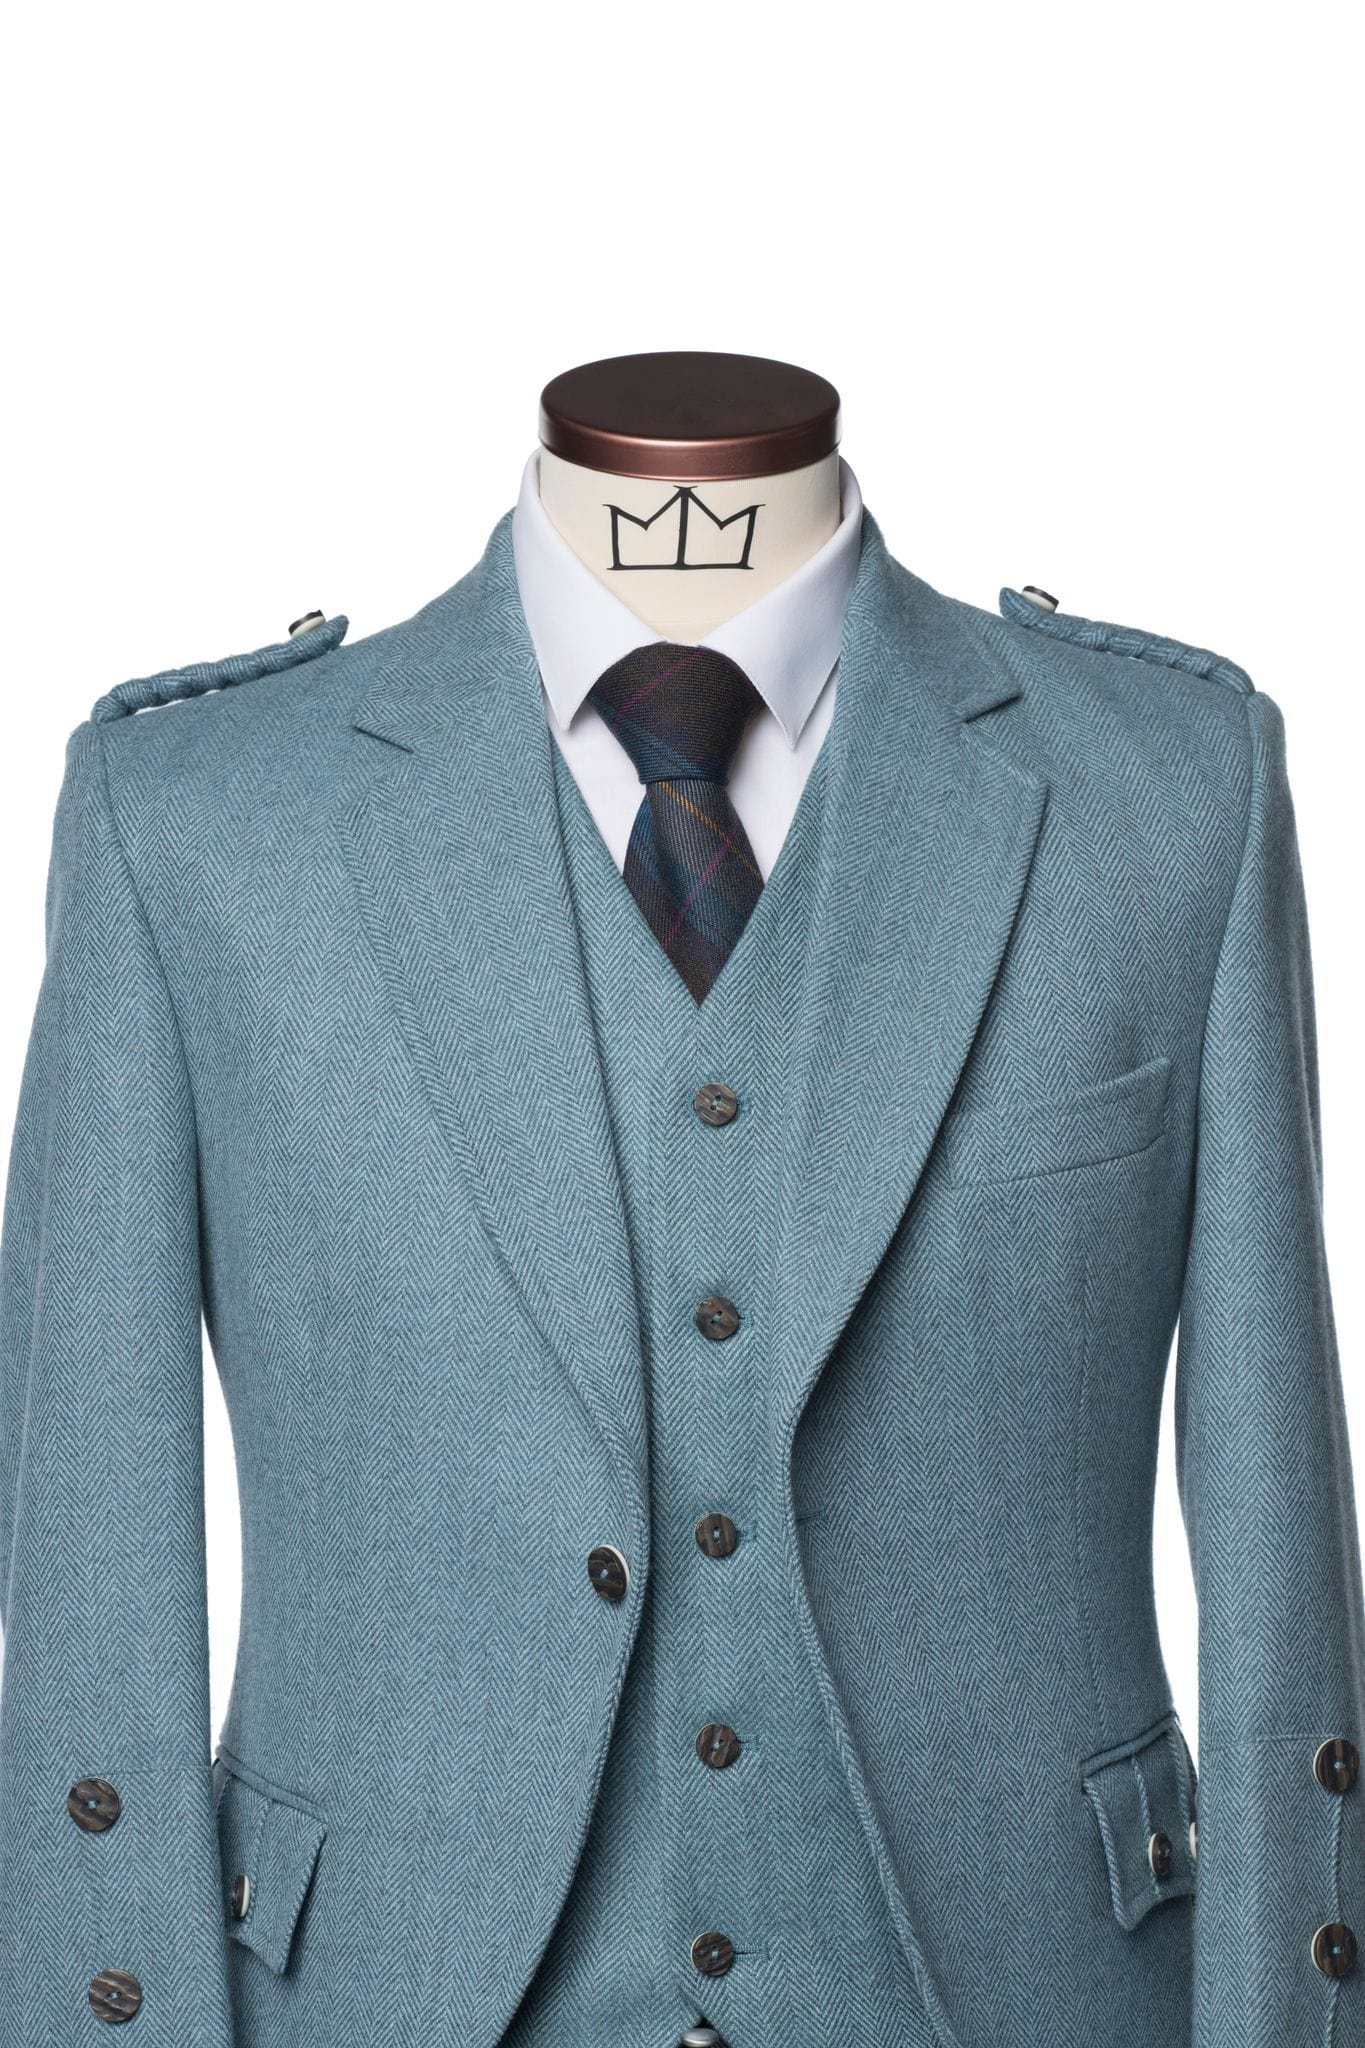 Lovat Blue Tweed Kilt Outfit - MacGregor and MacDuff